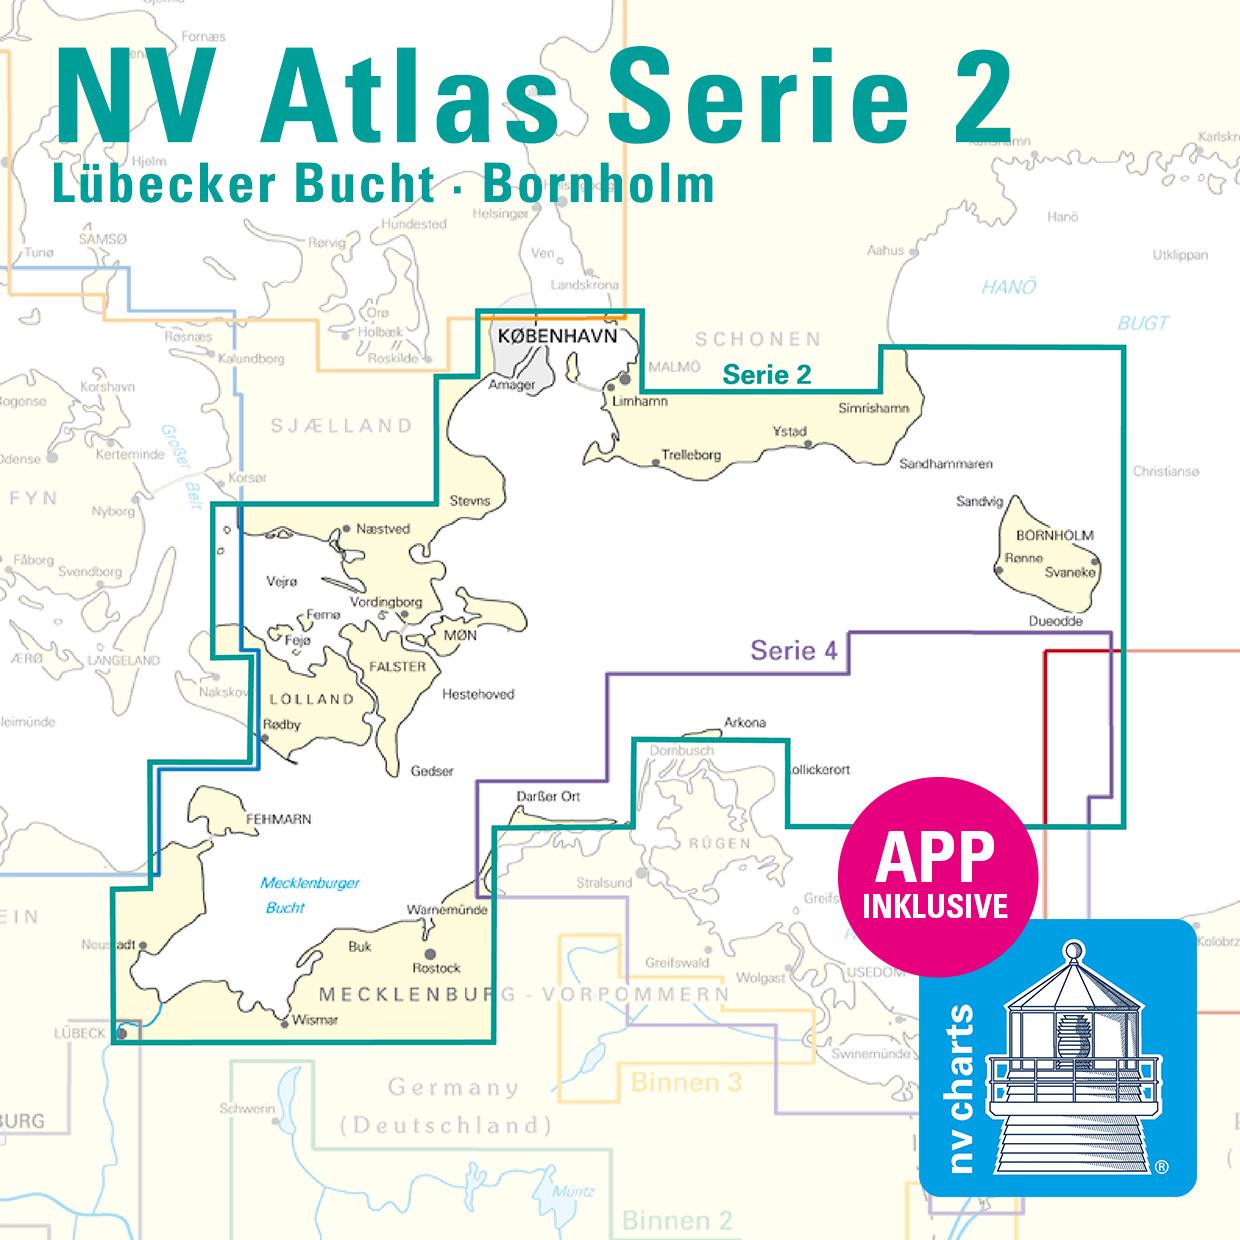 NV Charts Baltic Serie 2 Plano - Lübecker Bucht, Bornholm - Kopenhagen